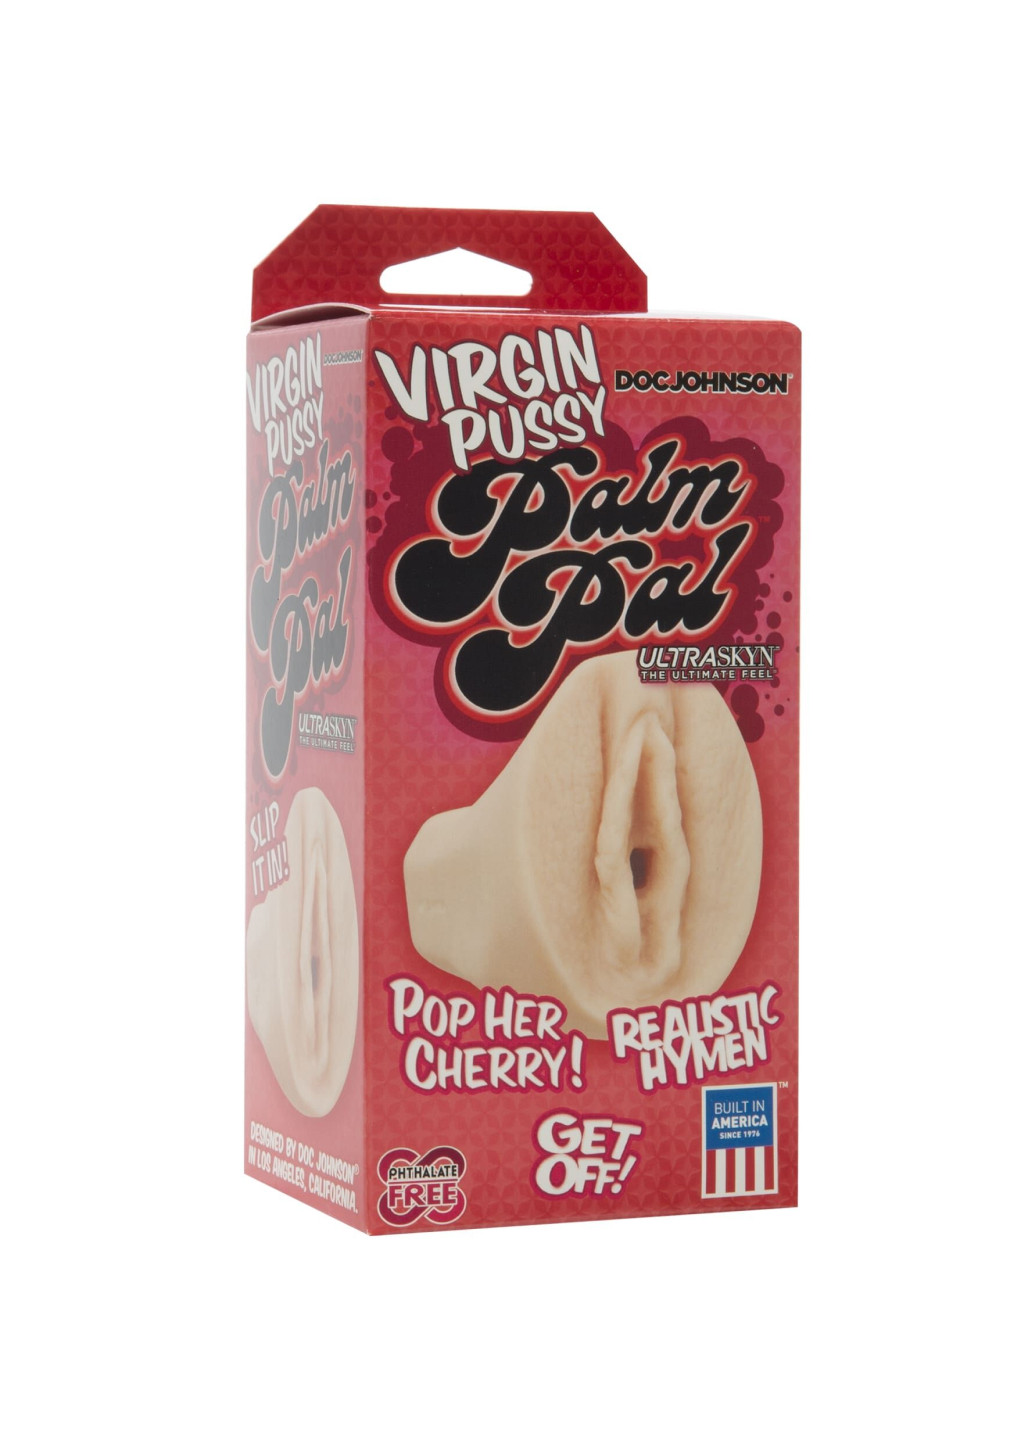 Мастурбатор вагина девственницы Virgin Pussy Palm Pal - ULTRASKYN Doc Johnson (252176663)